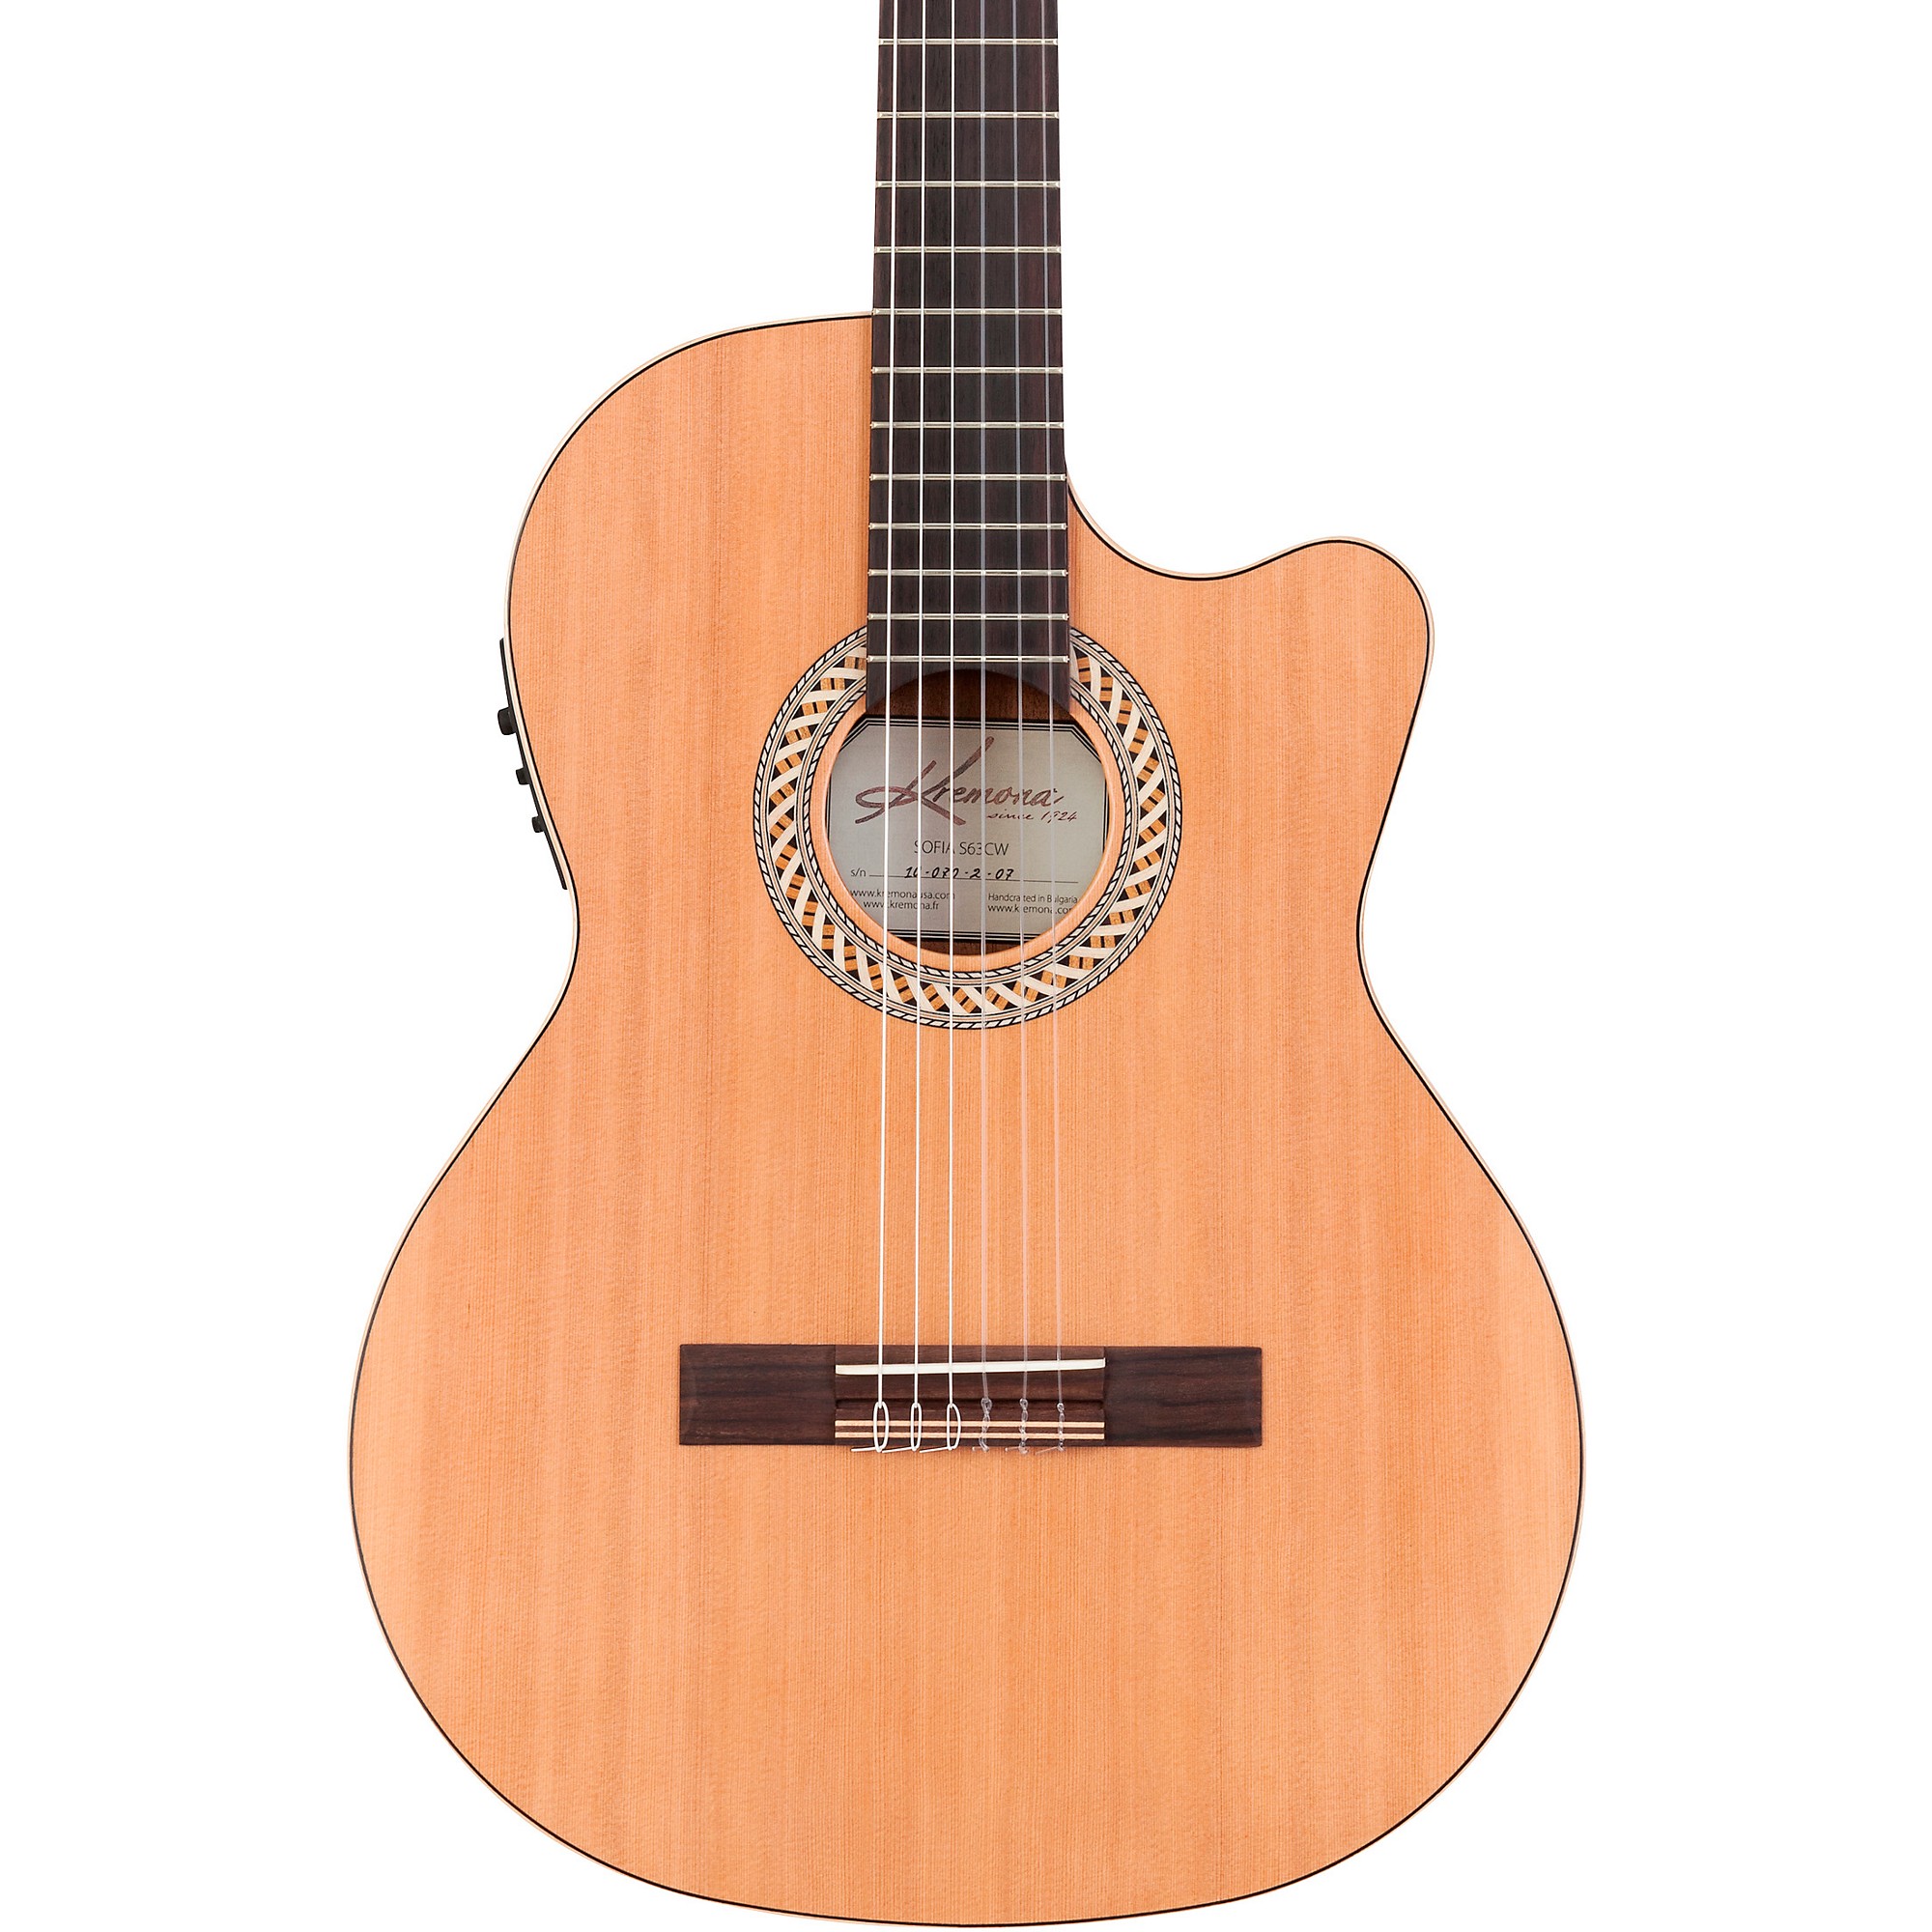 Kremona Sofia S63CW Classical Acoustic-Electric Guitar Natural